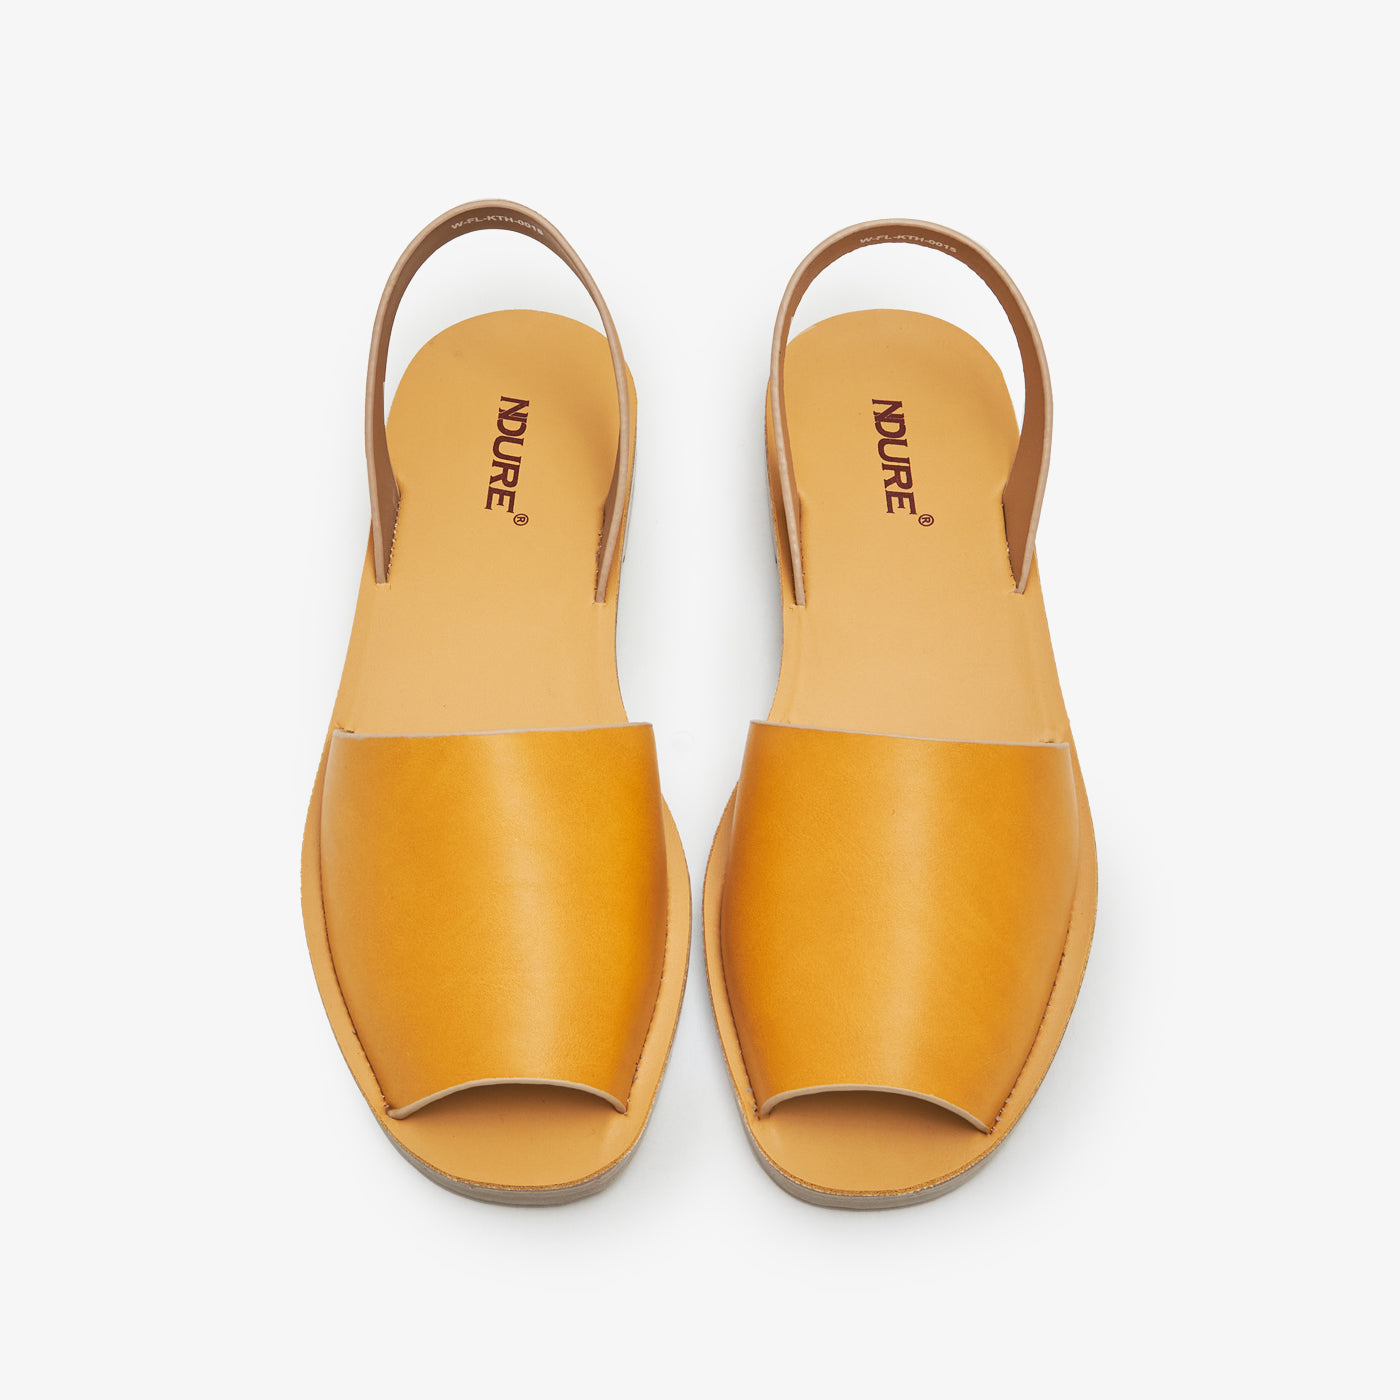 Women's Peep Toe Sandals